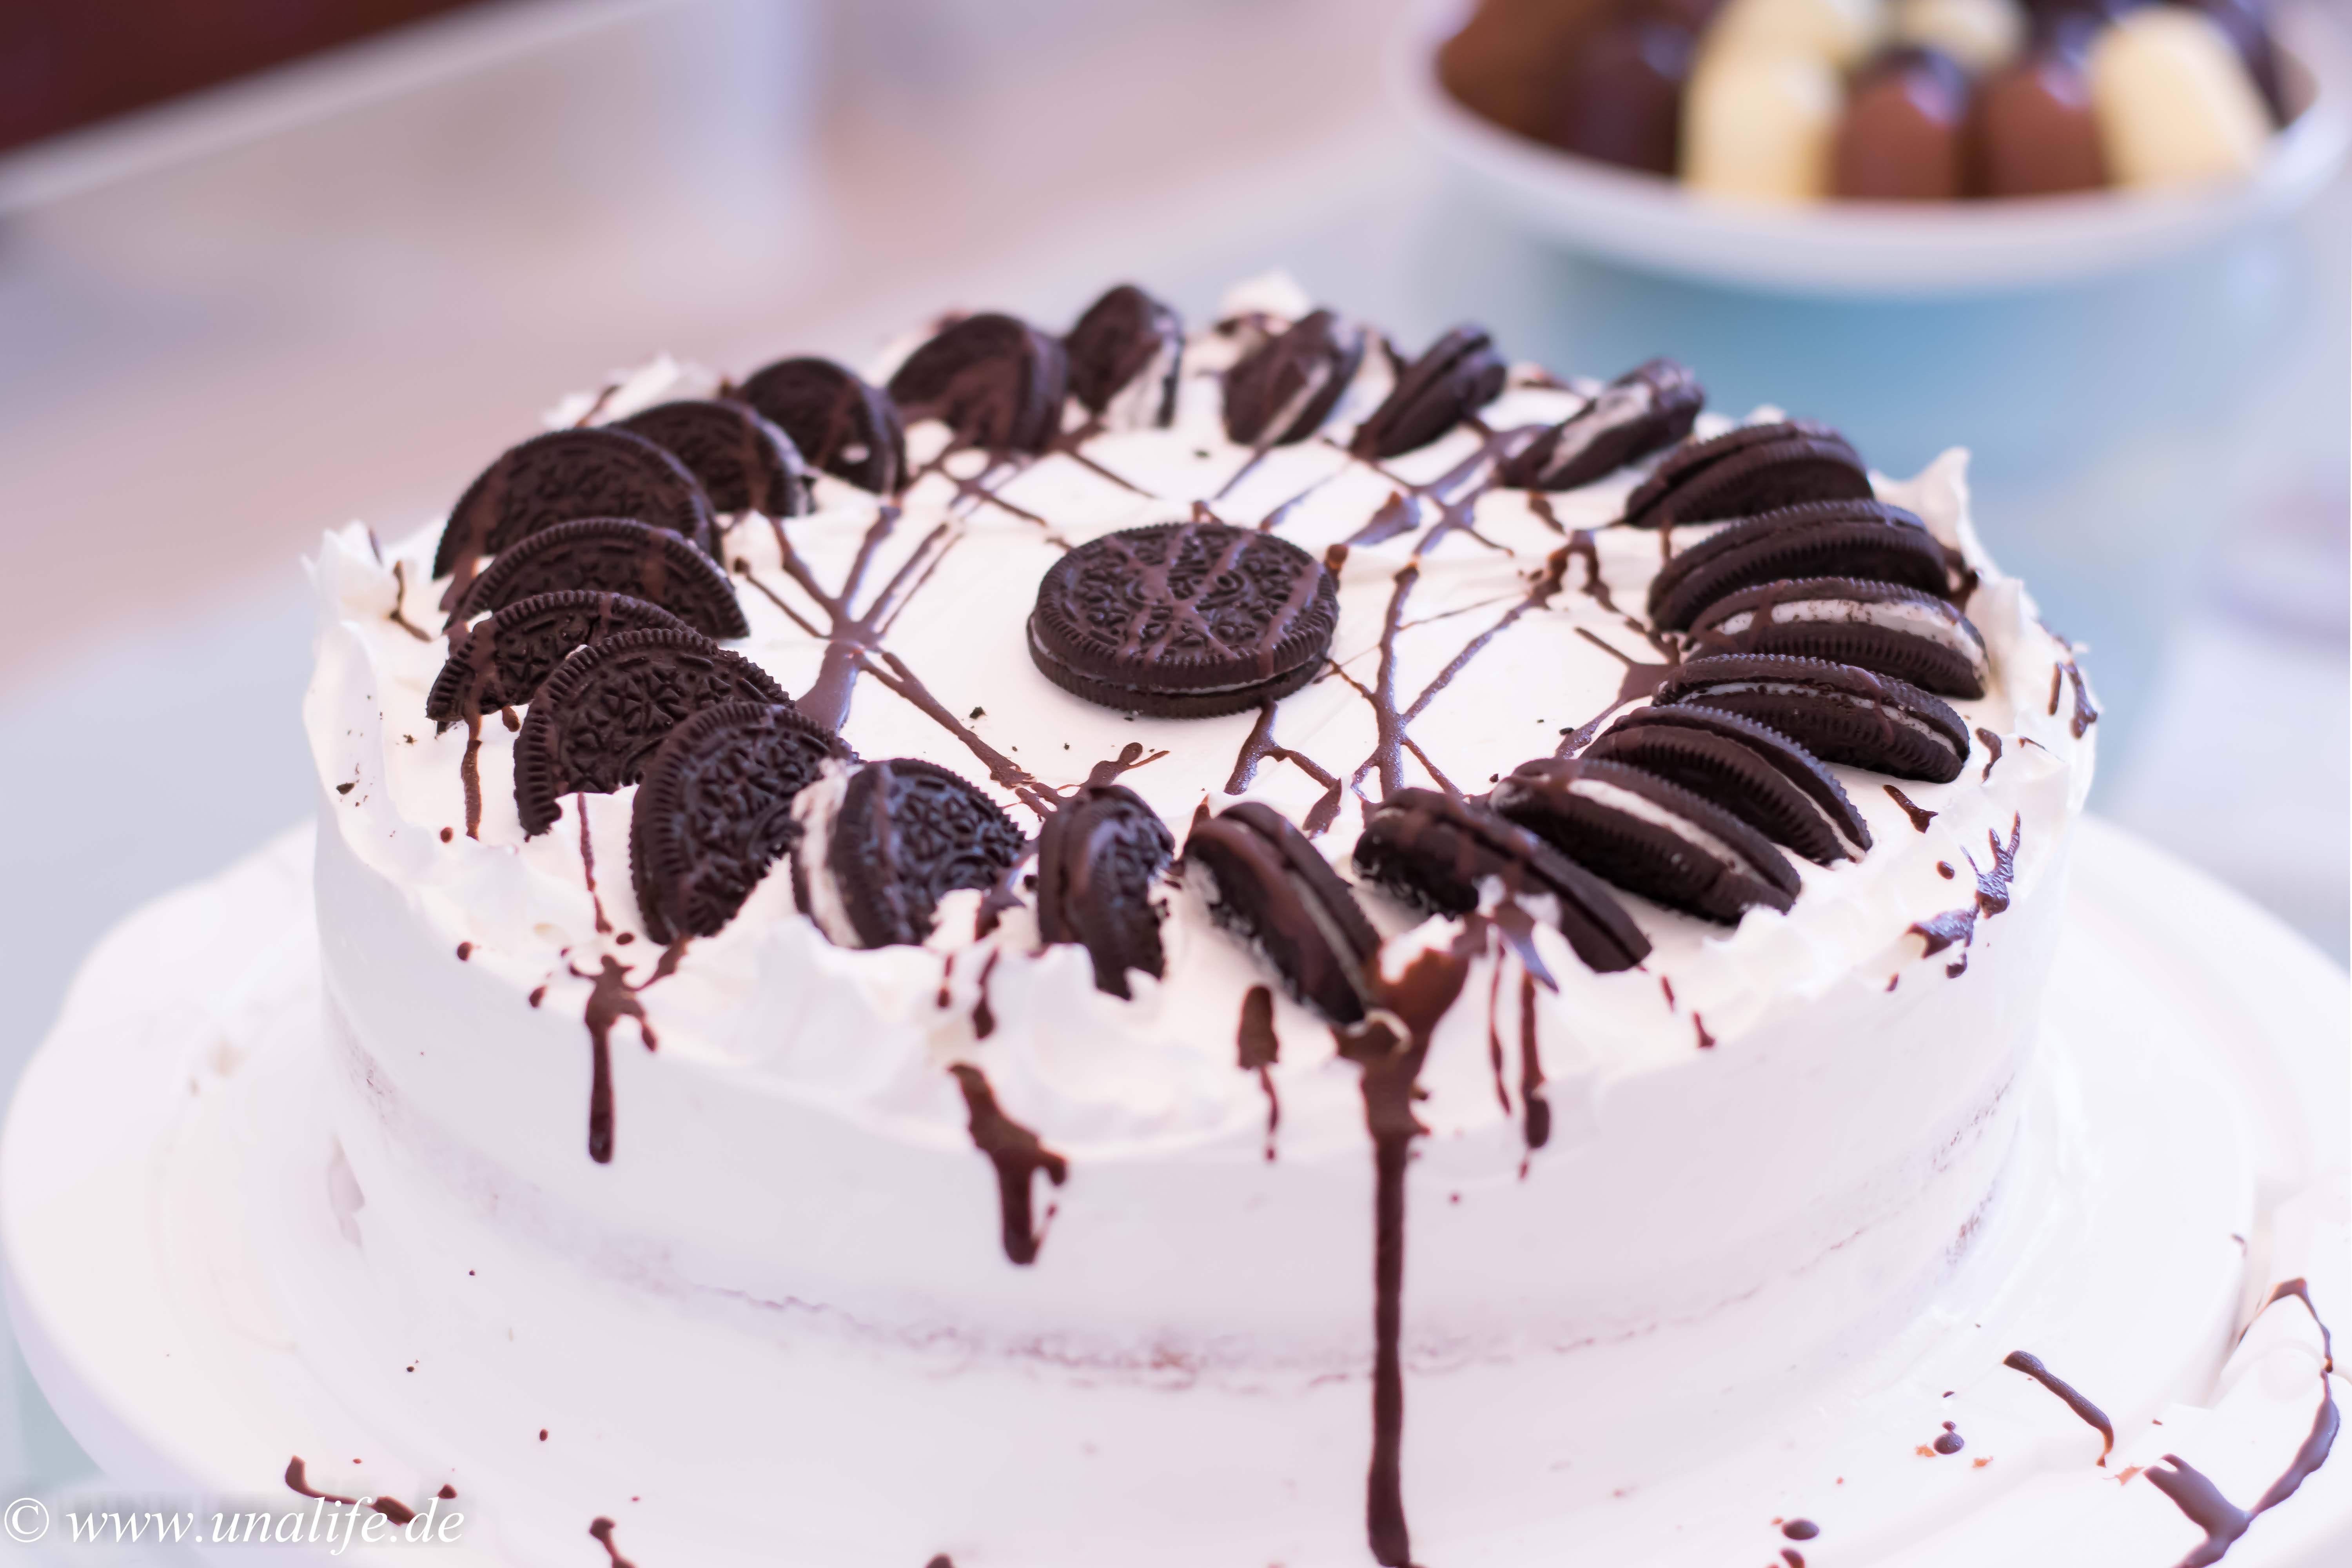 Oreo Torte in 5 Minuten! | Unalife